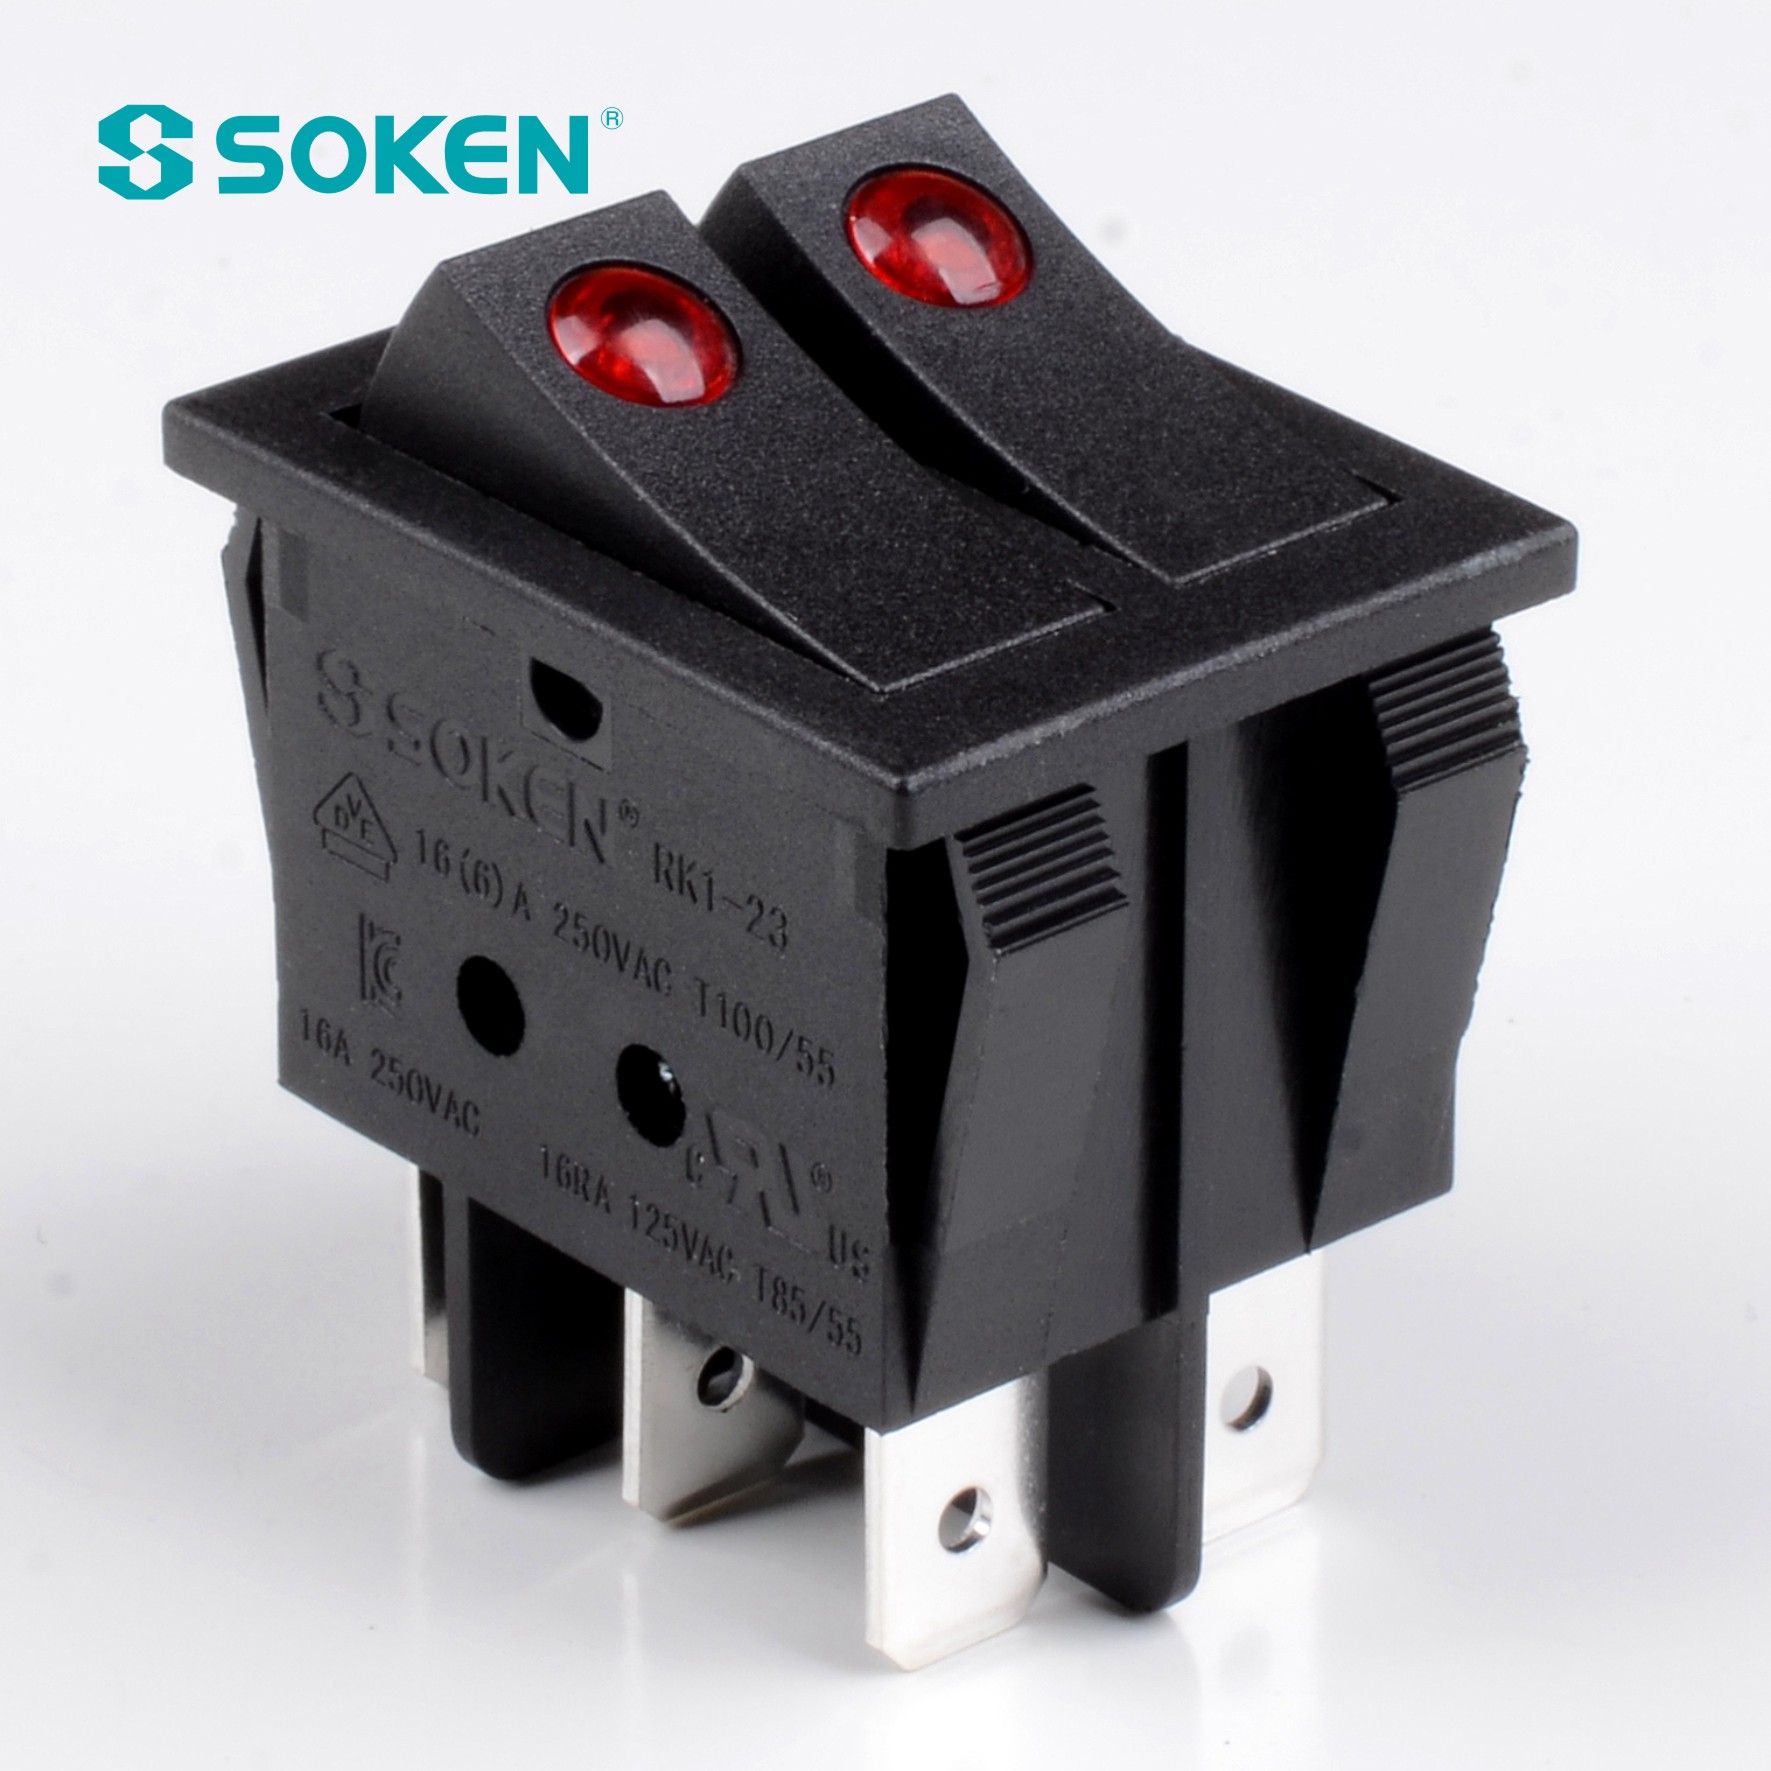 Soken Switch Switch Rocker Dúbailte Cnaipe Cúpla T85